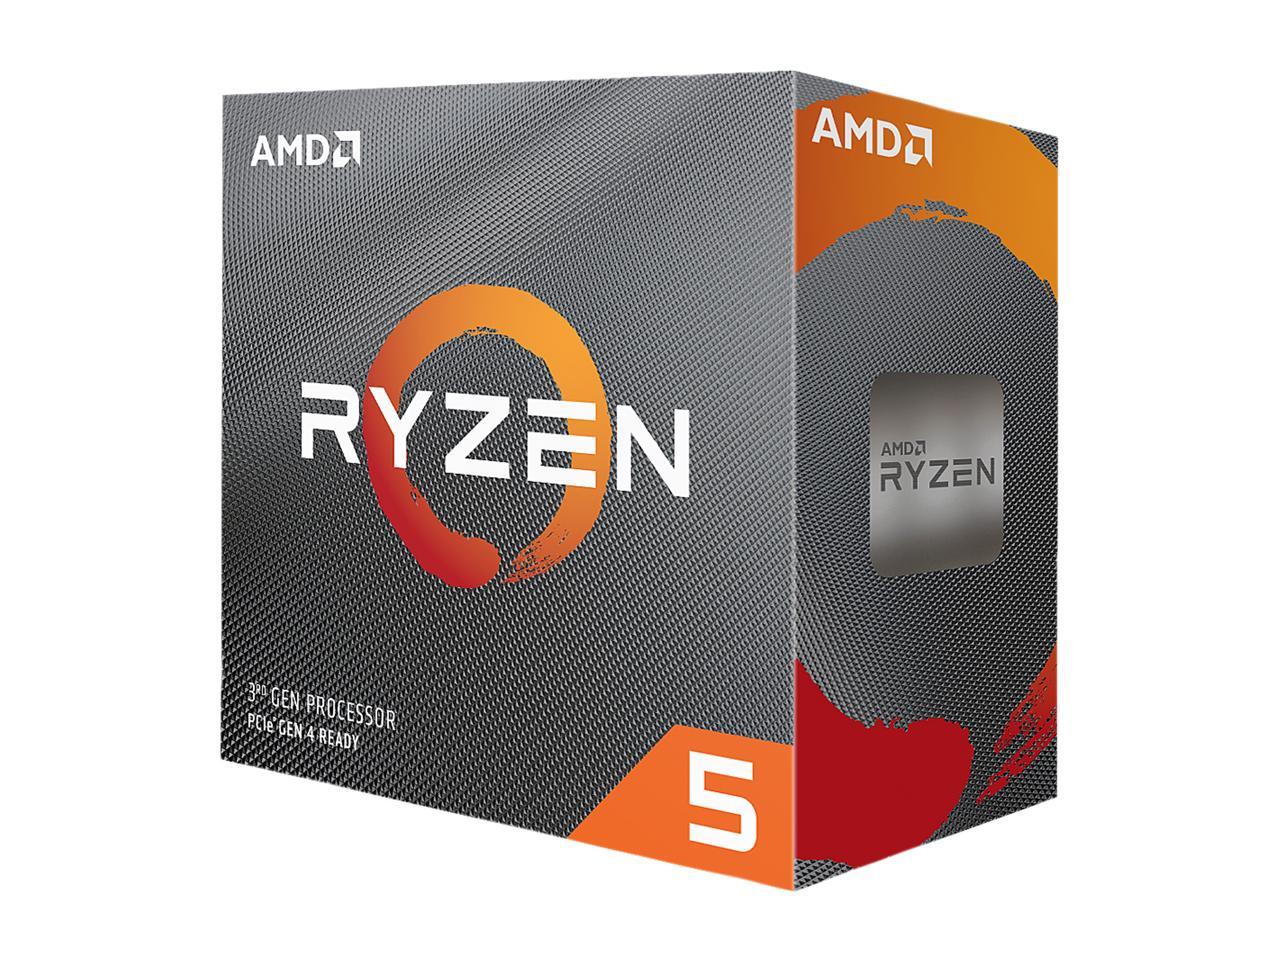 AMD Ryzen 5 3600 6-Core, 12-Thread 4.2 GHz AM4 Processor $195